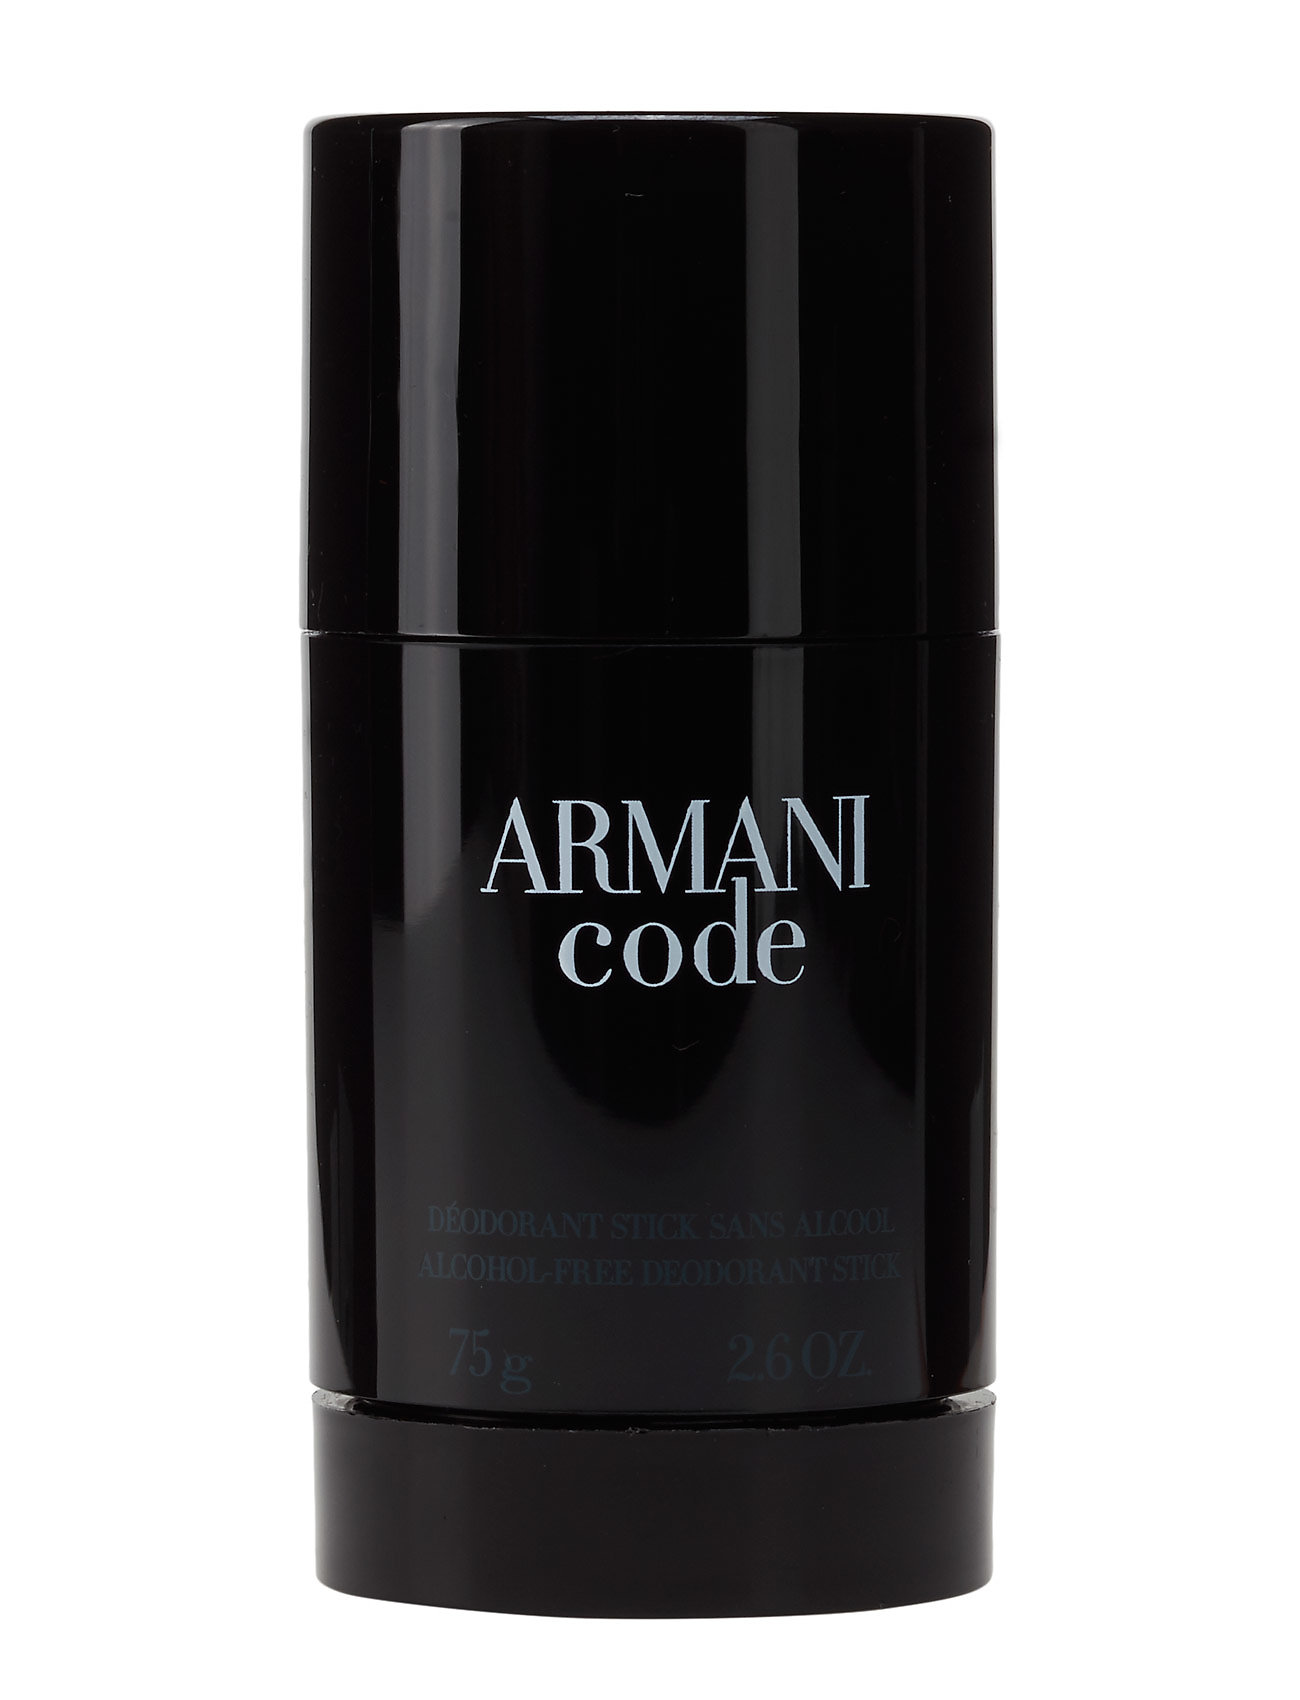 Suri Ansvarlige person forurening Armani Code Deodorant Stick - Deostift - Boozt.com